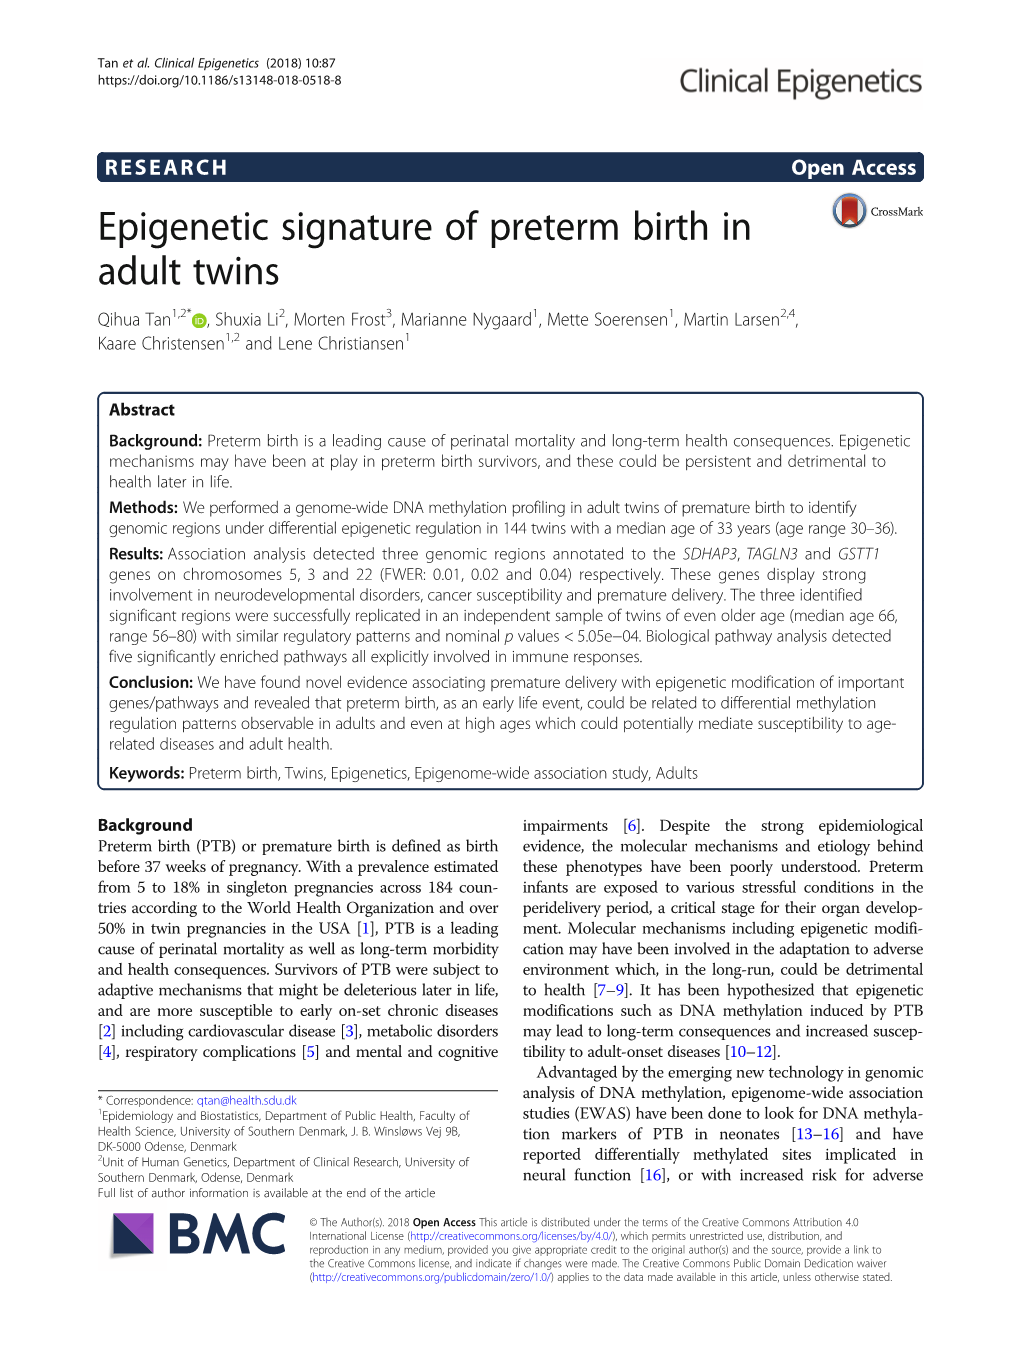 Epigenetic Signature of Preterm Birth in Adult Twins